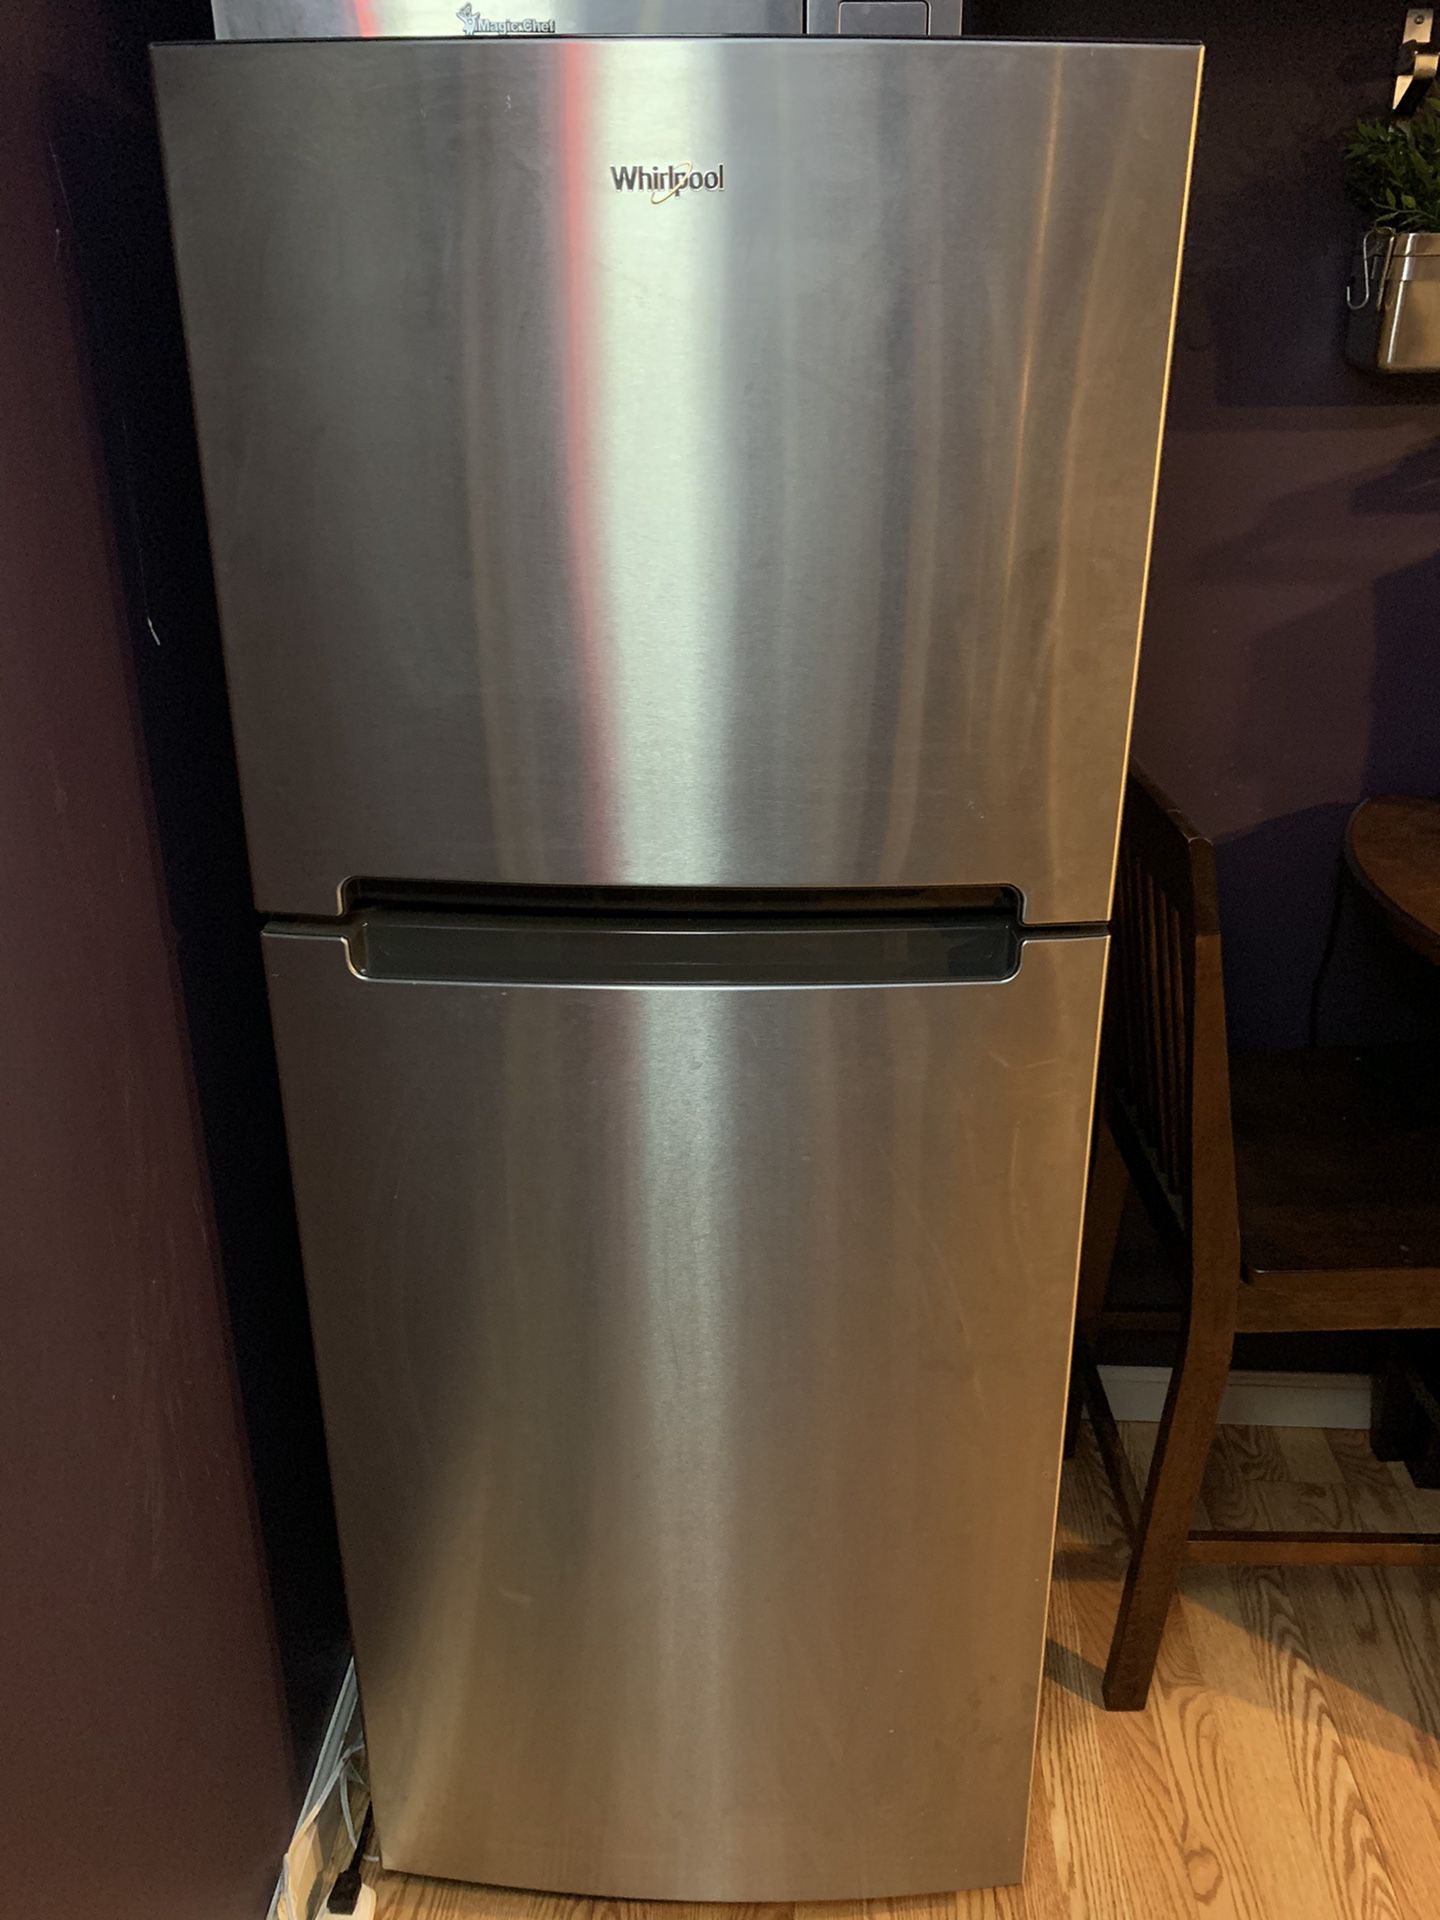 Whirlpool stainless steel refrigerator 10.7cu ft.